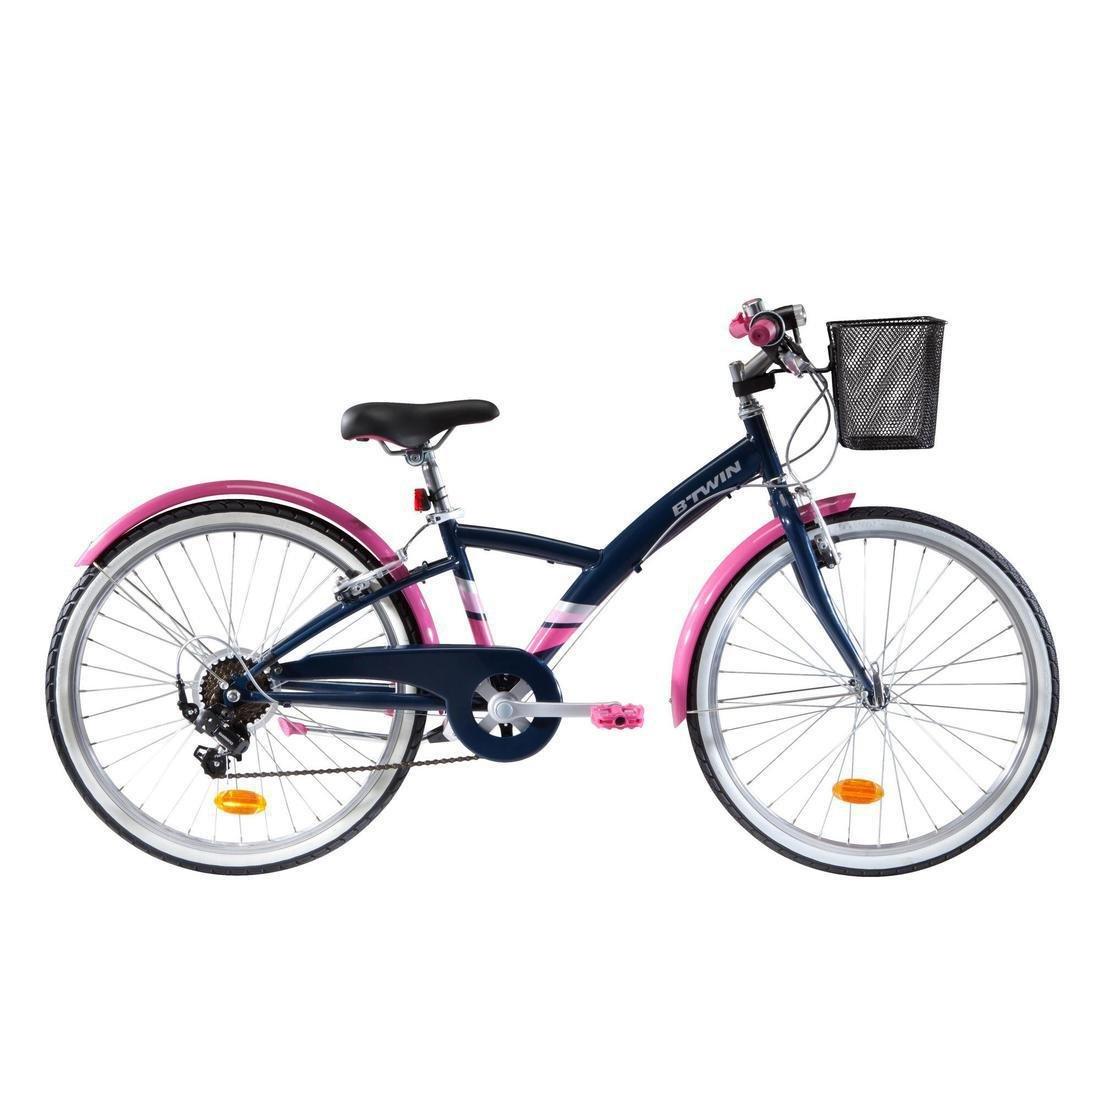 BTWIN - Kids Girls 24 Inch Hybrid Bike - 500 9-12 Years Old, Pink